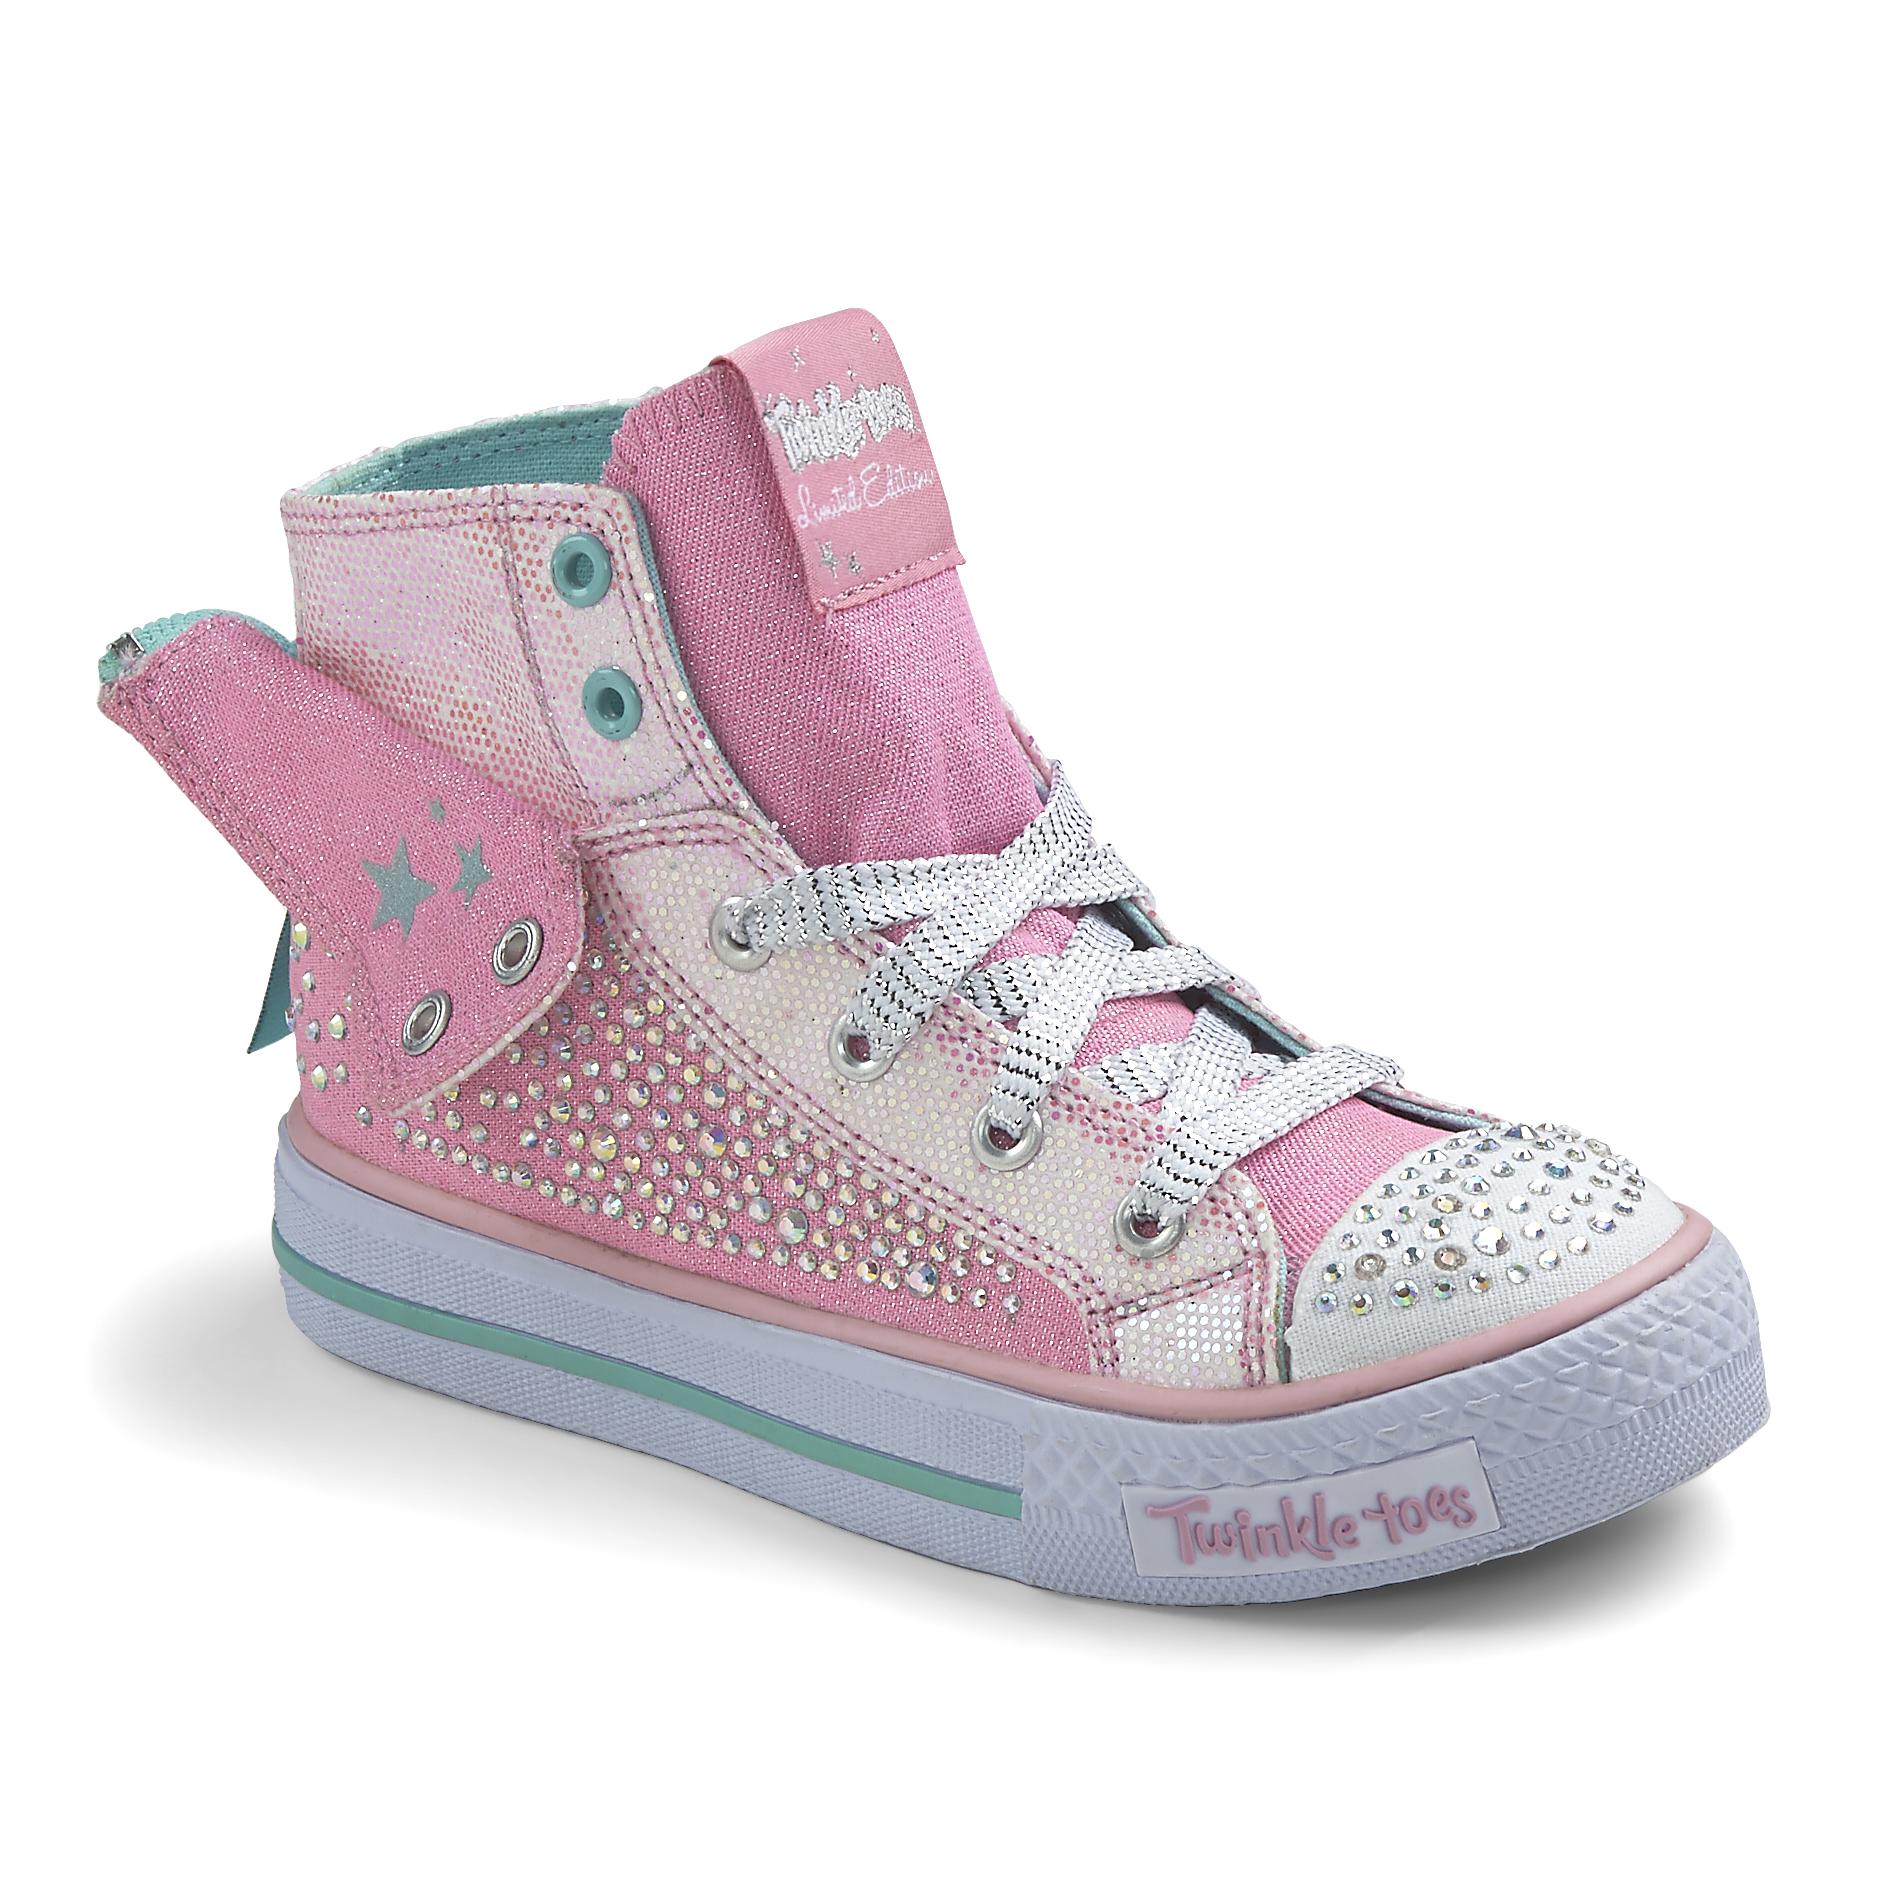 Skechers Girl's Rock N Beauty Twinkle Toes Athletic Shoe - Pink/White